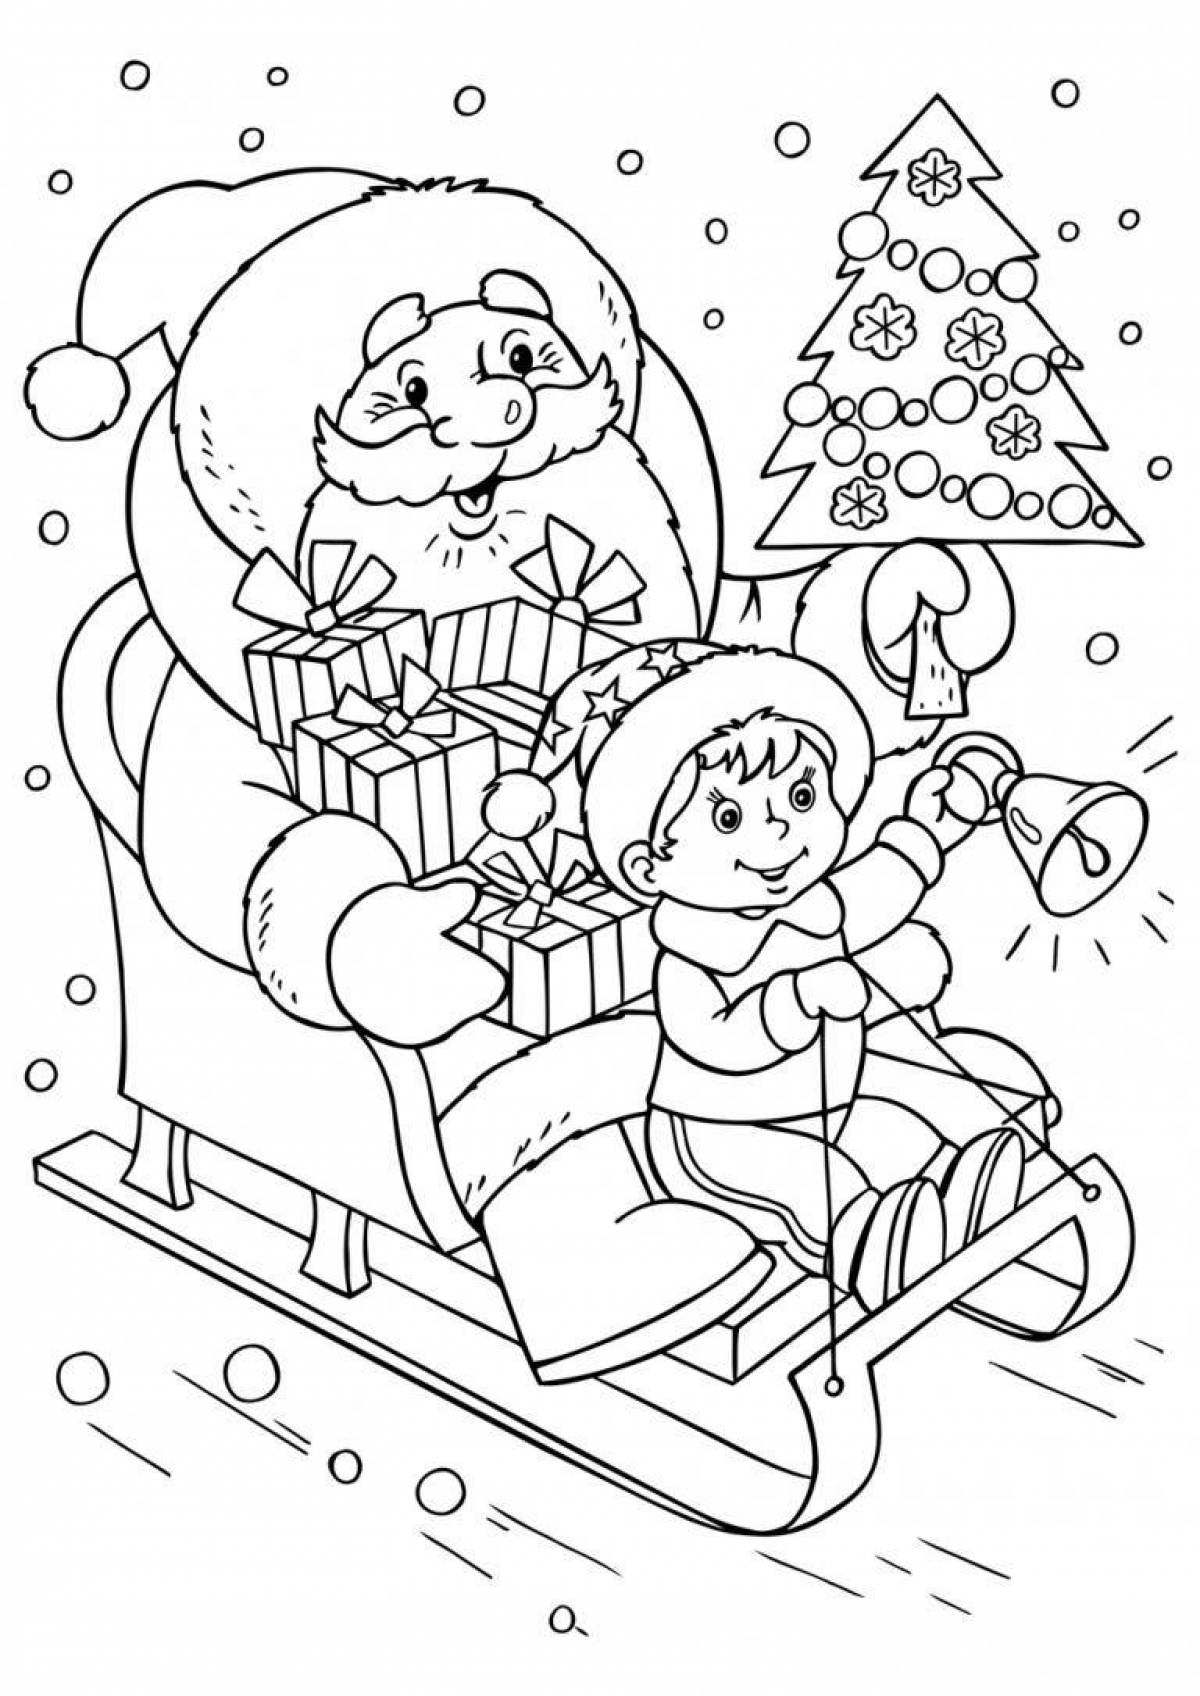 Funny santa claus coloring book